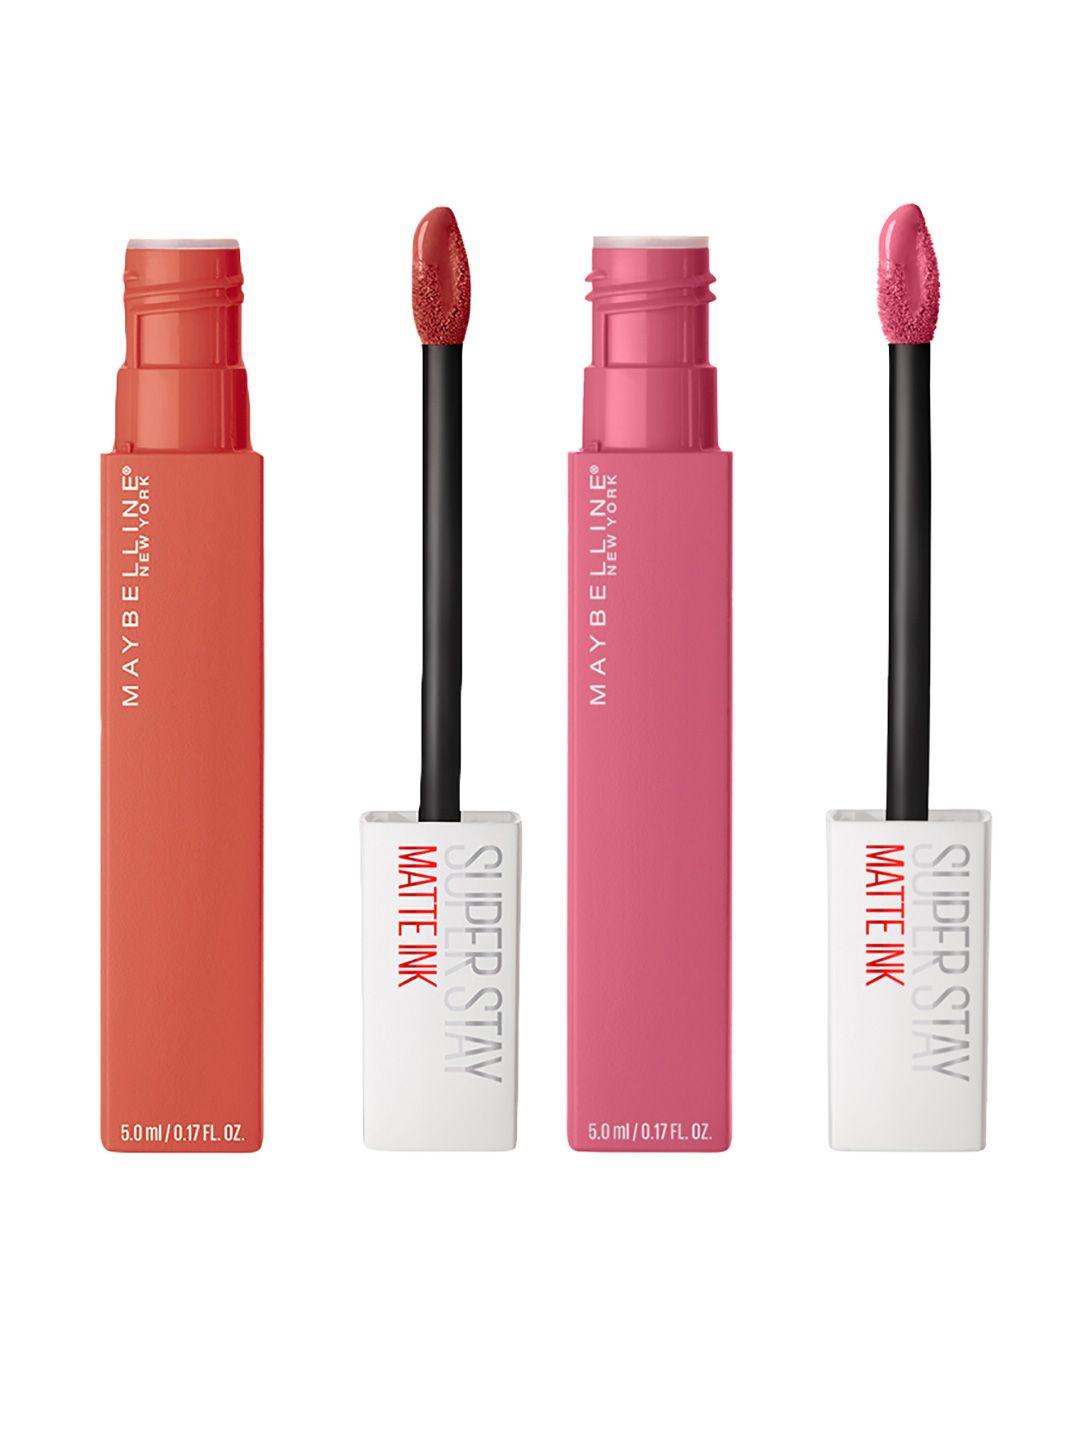 Maybelline Set of 2 New York Super Stay Matte Ink Liquid Lipsticks - Inspirer & Versatile Price in India